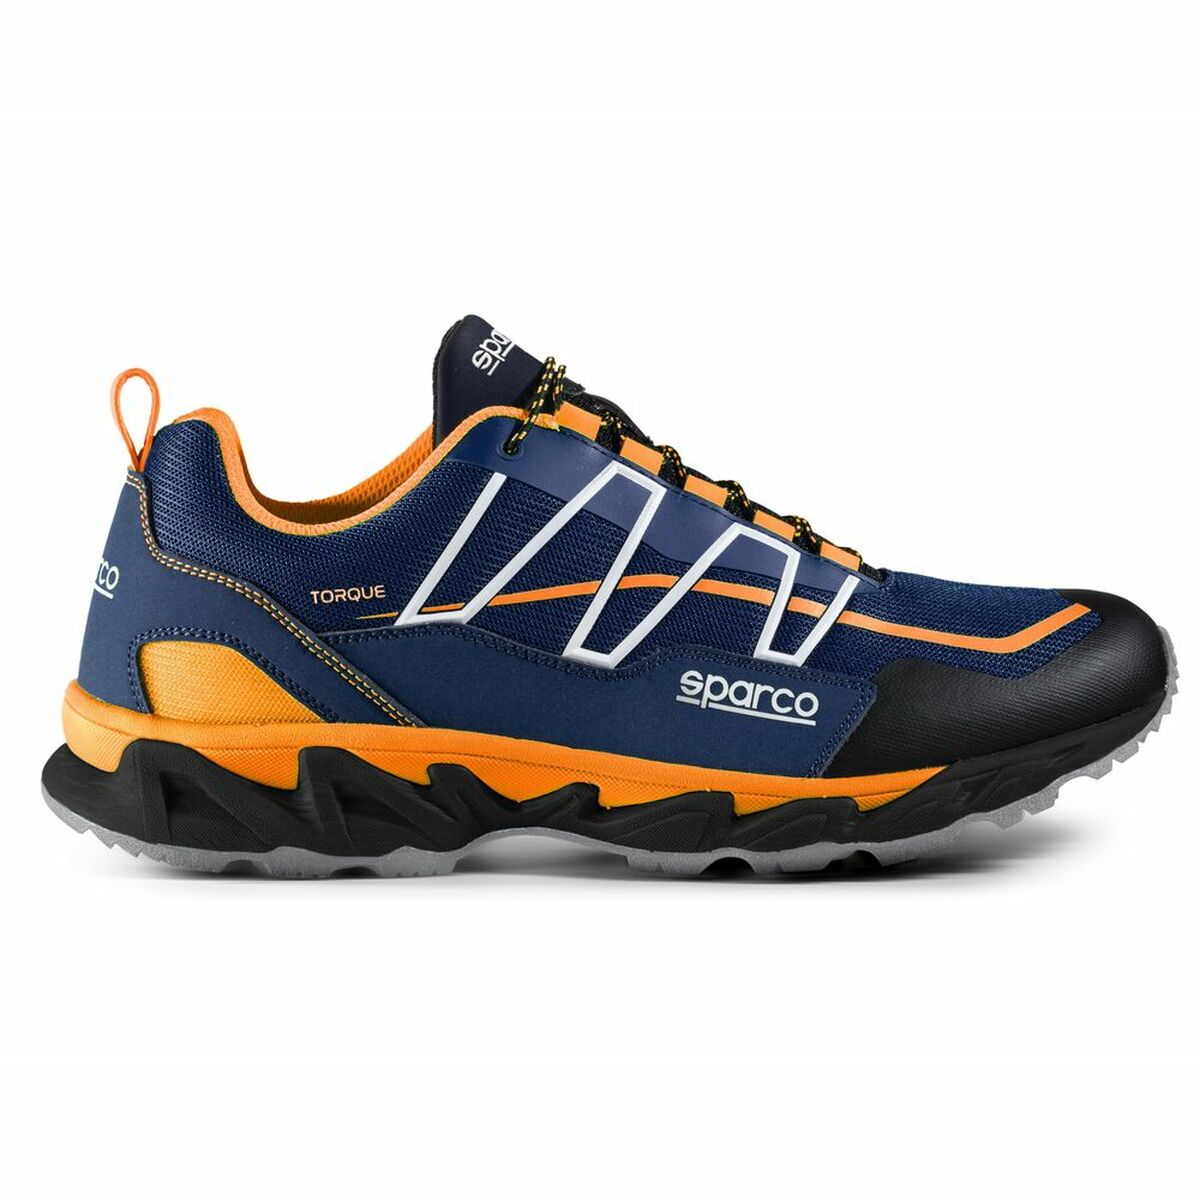 Kaufe Sicherheits-Schuhe Sparco Torque Charade Orange Marineblau (41) bei AWK Flagship um € 95.00